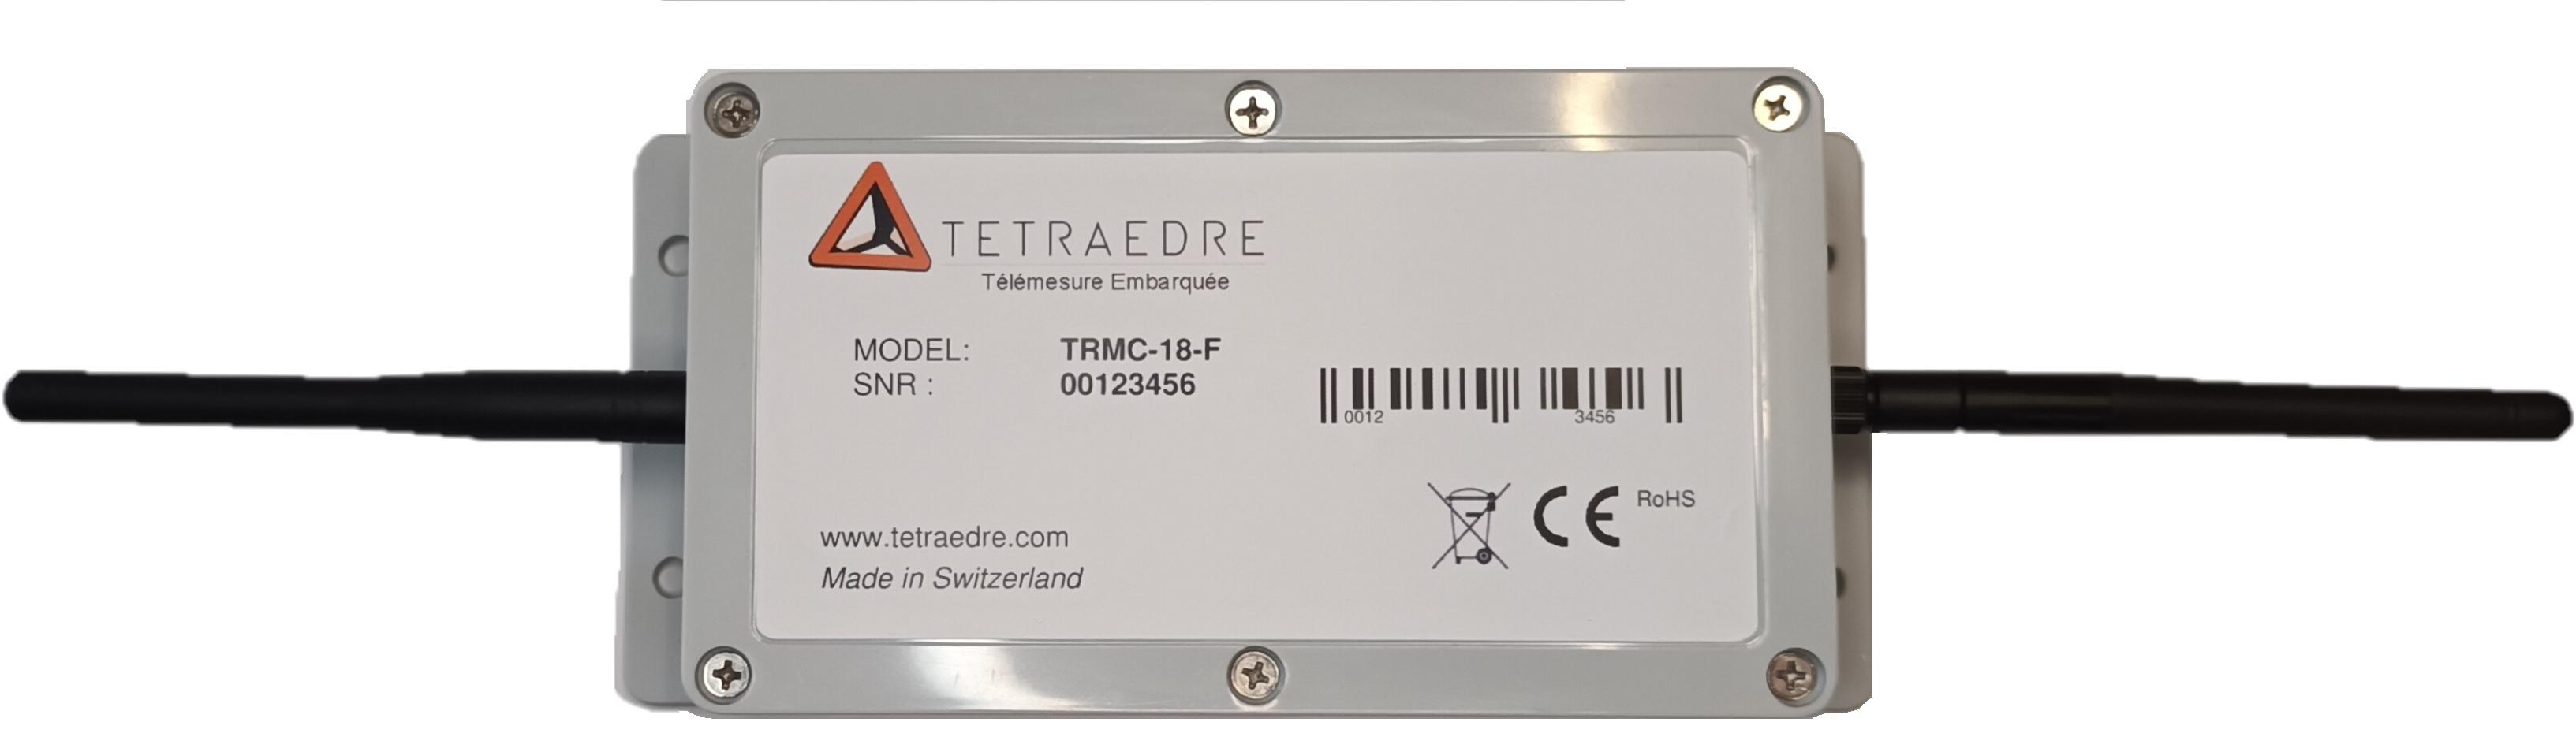 product_TRMC-18-F 2G/3G/4G